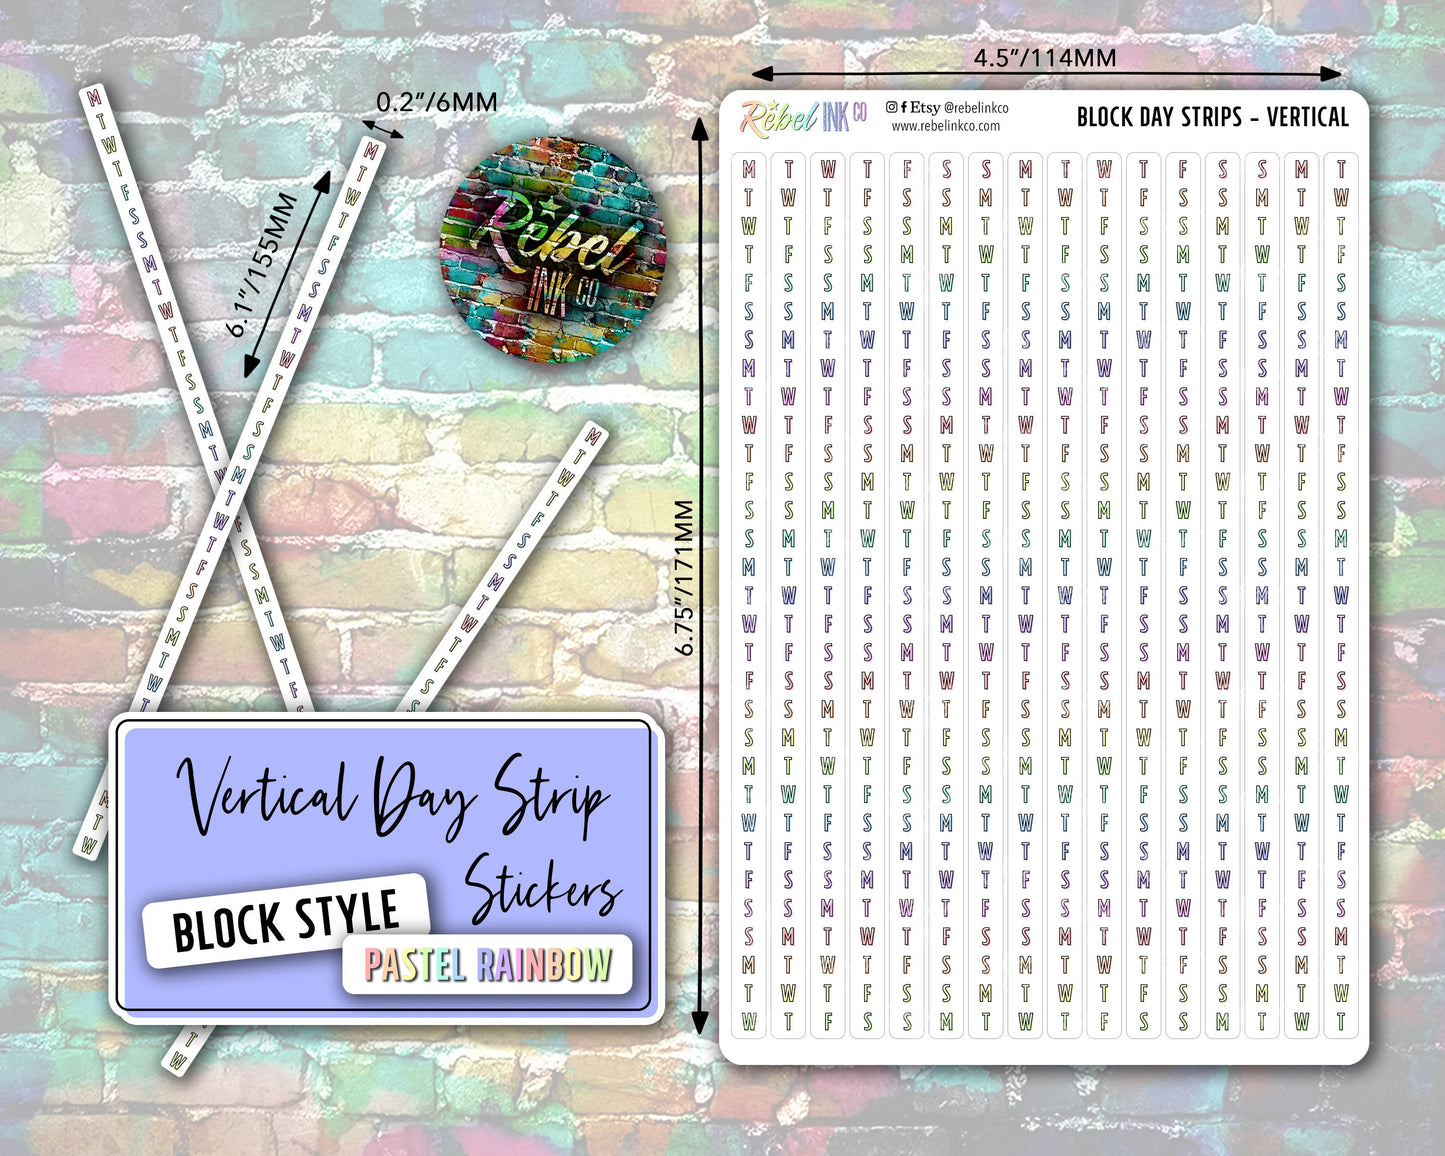 Vertical Day Strip Stickers - Pastel Rainbow - Block Style